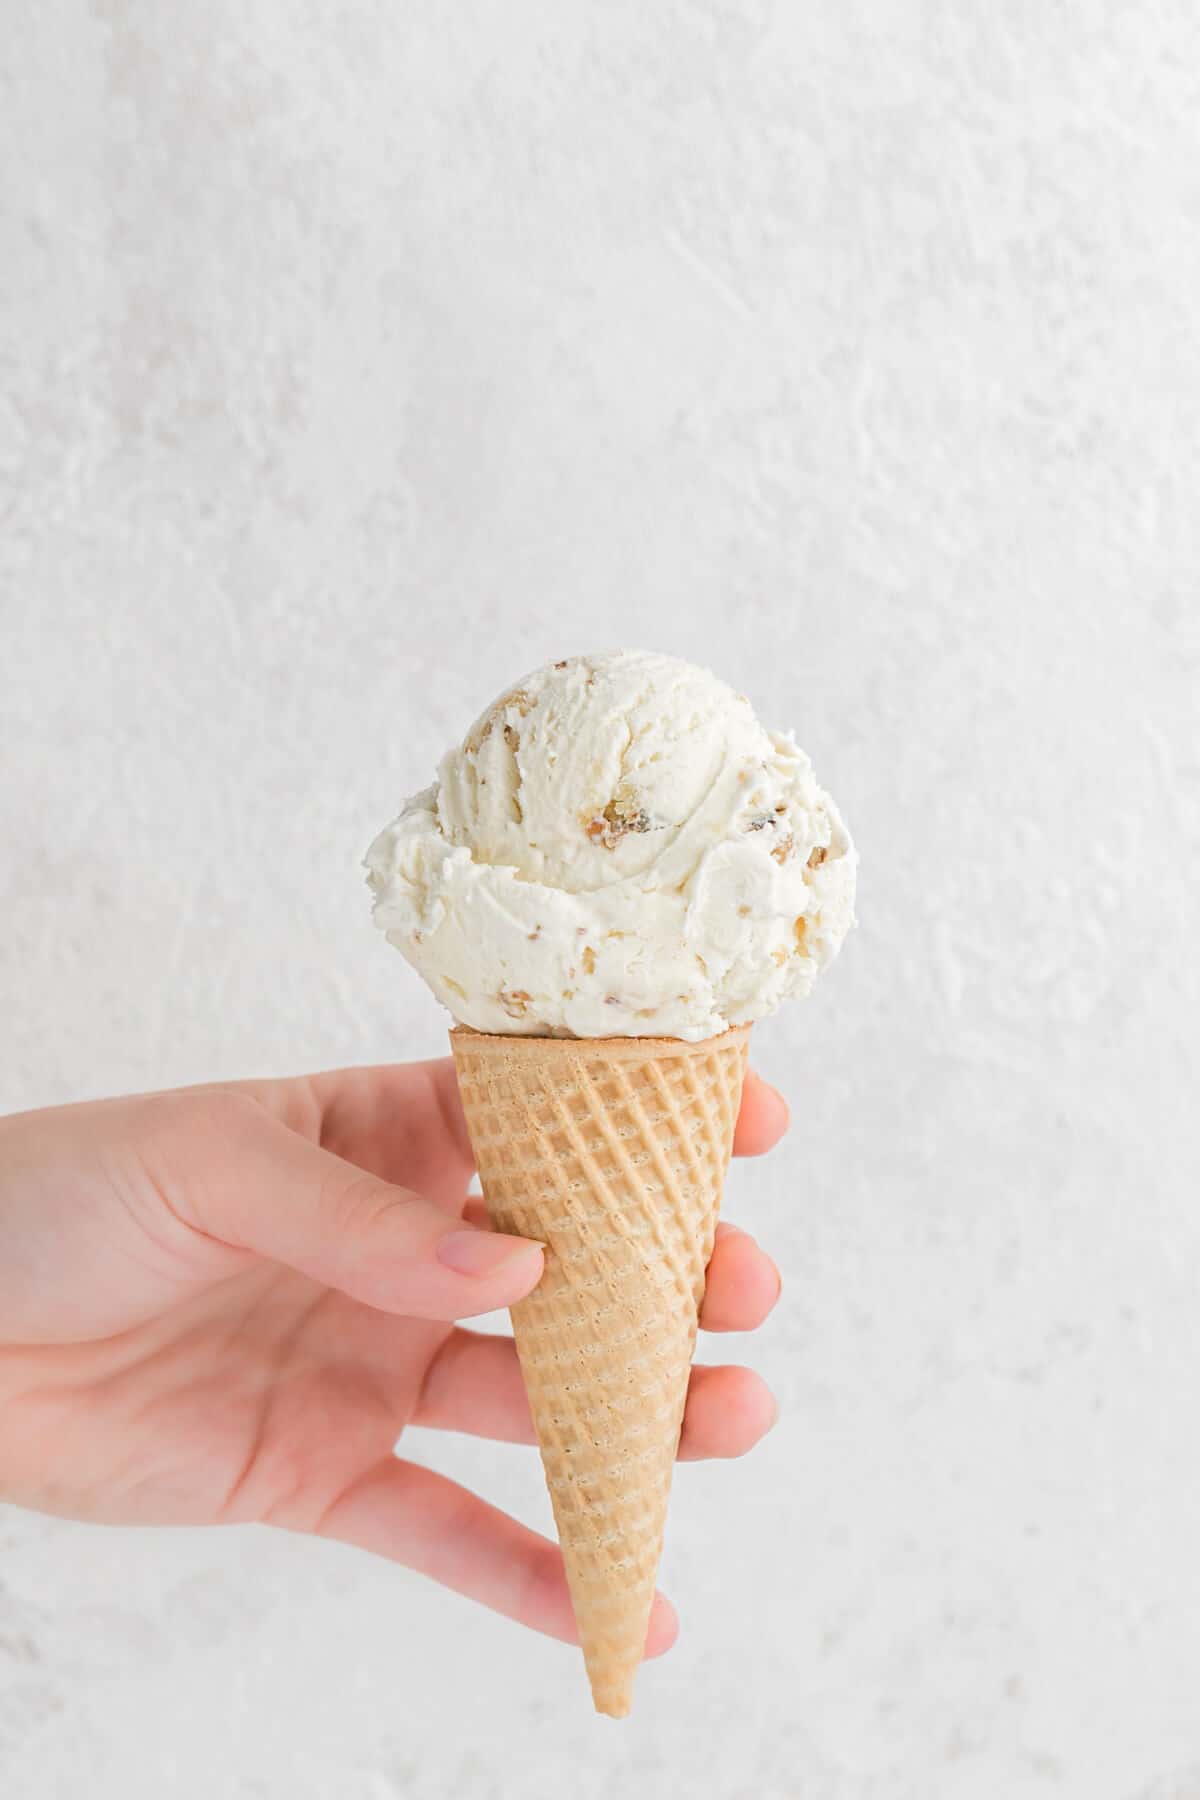 A hand holding a maple walnut ice cream cone.